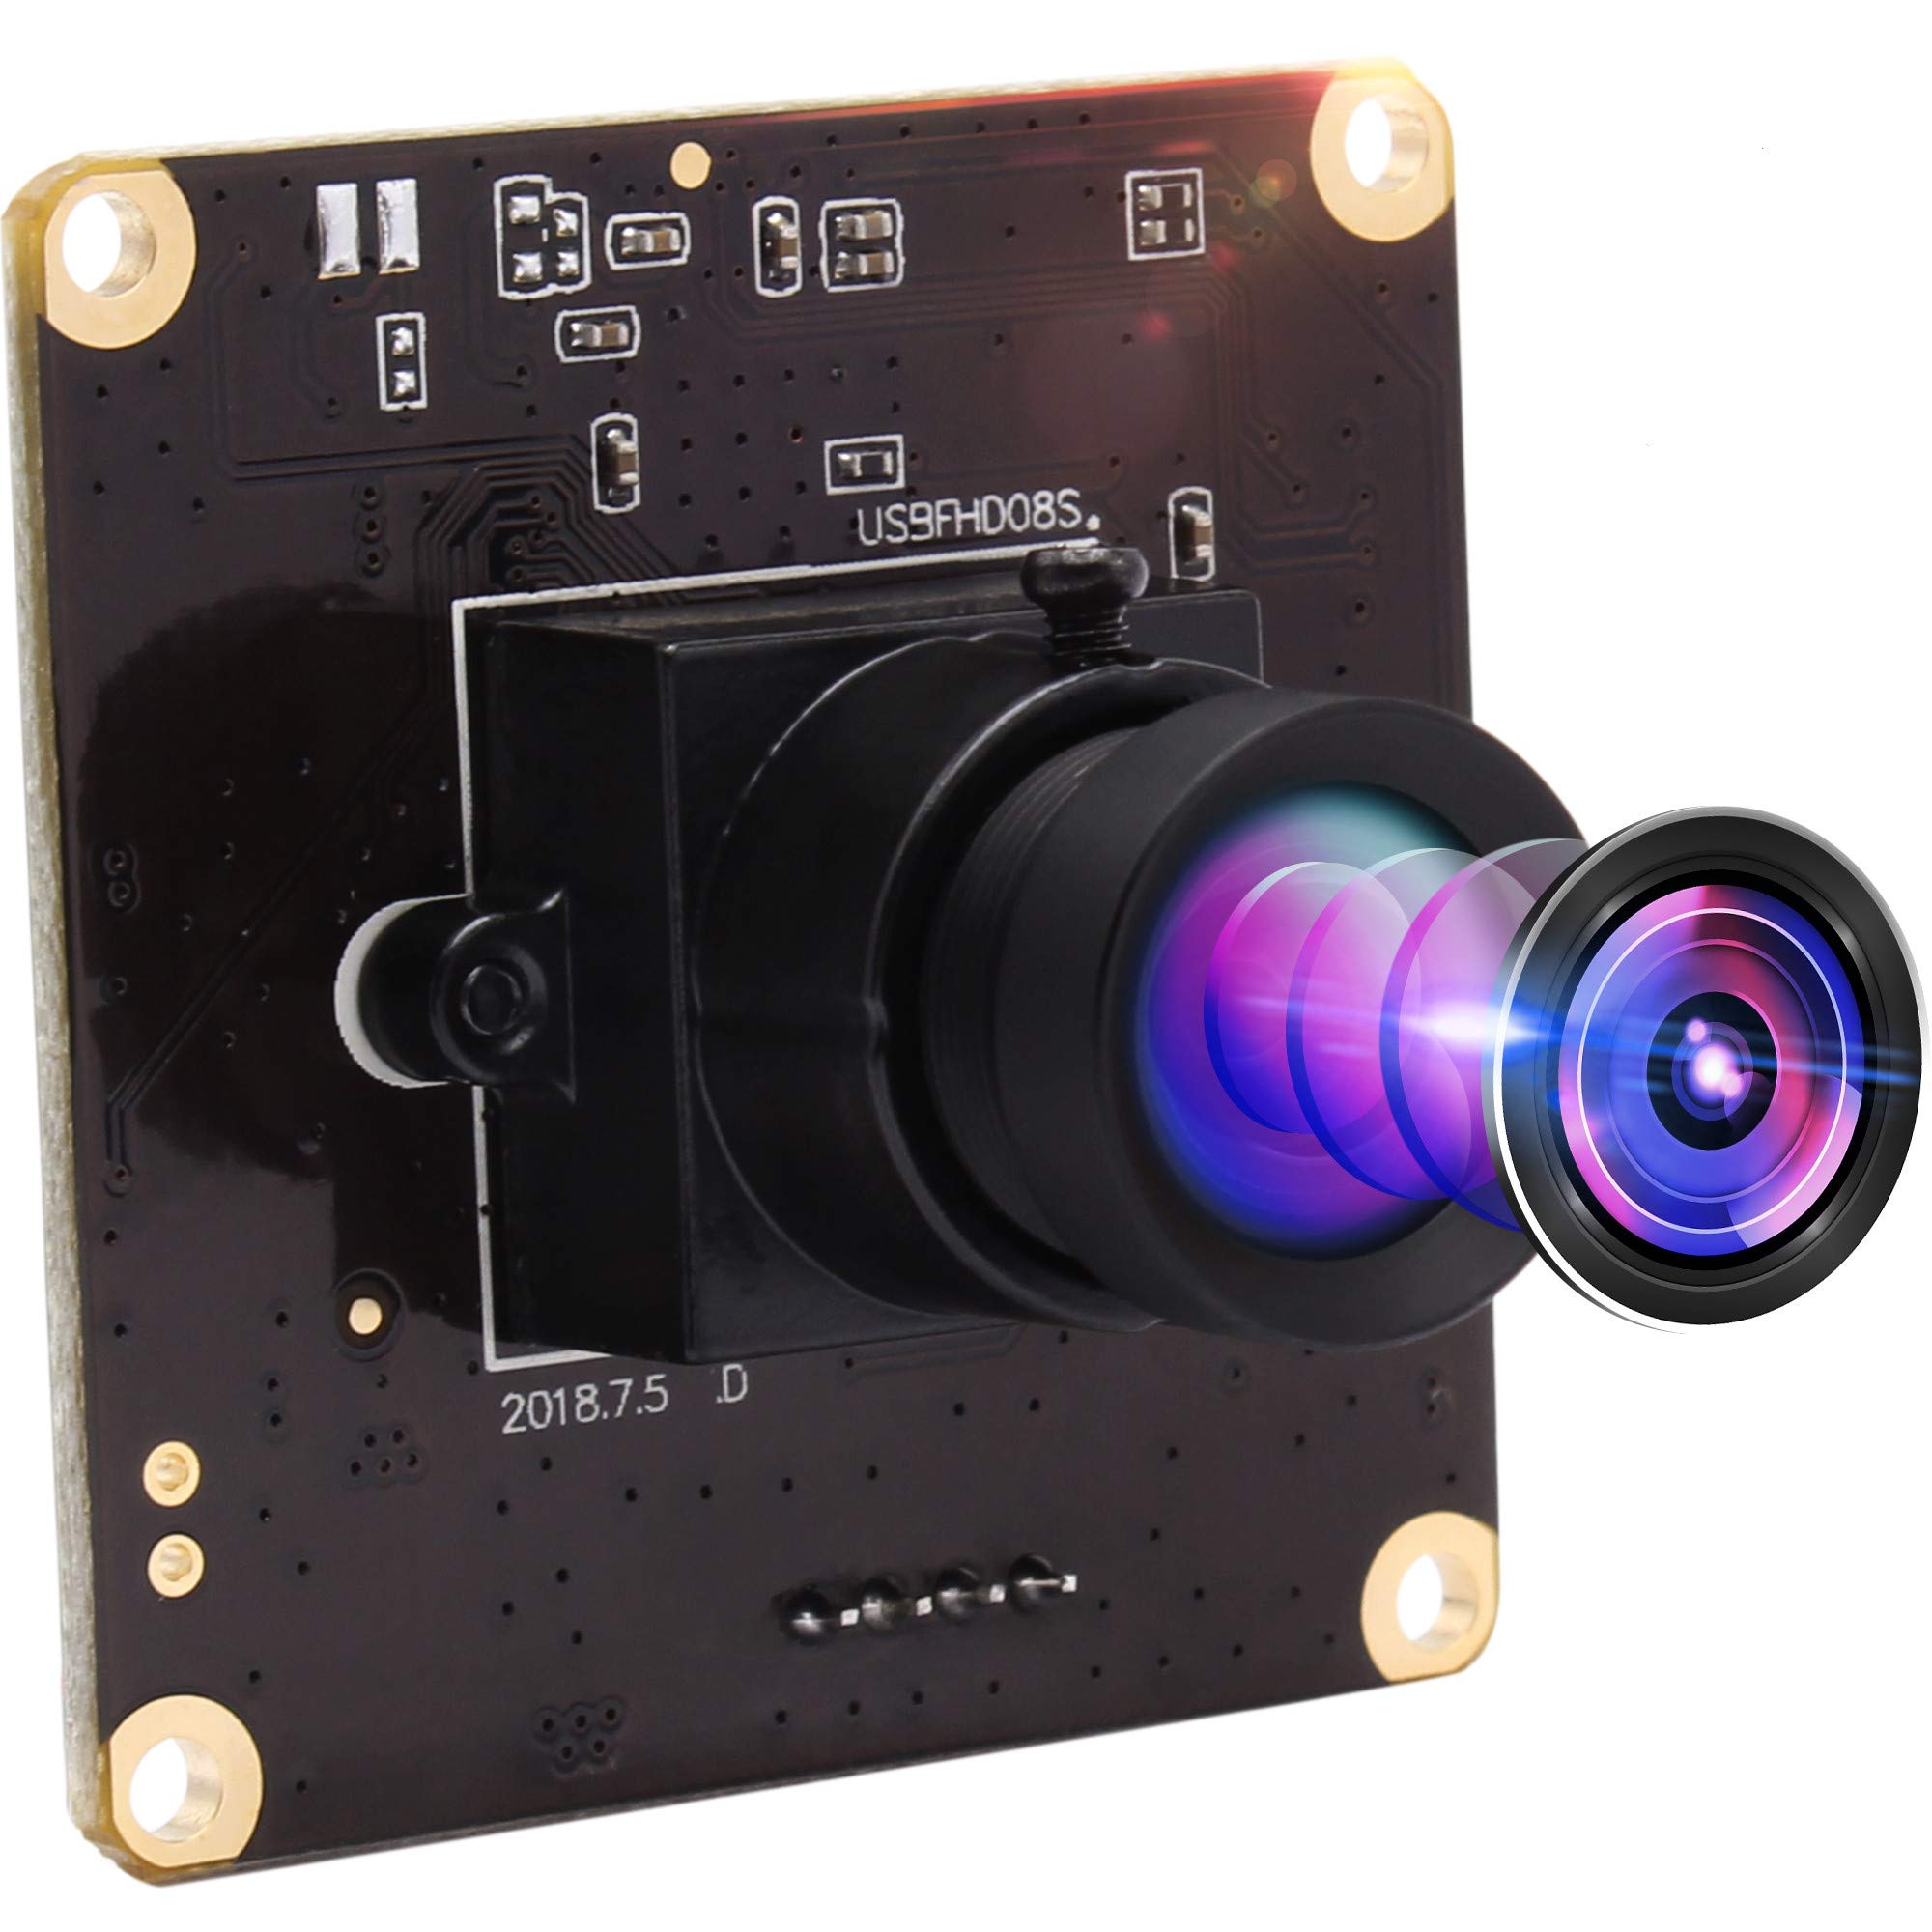 High Frame Rate 260fps Webcam 2MP 1080P USB Camera with OV4689 Sensor Webcam Mini USB Camera Module with No Distortion Lens for Linux Windows Andro...